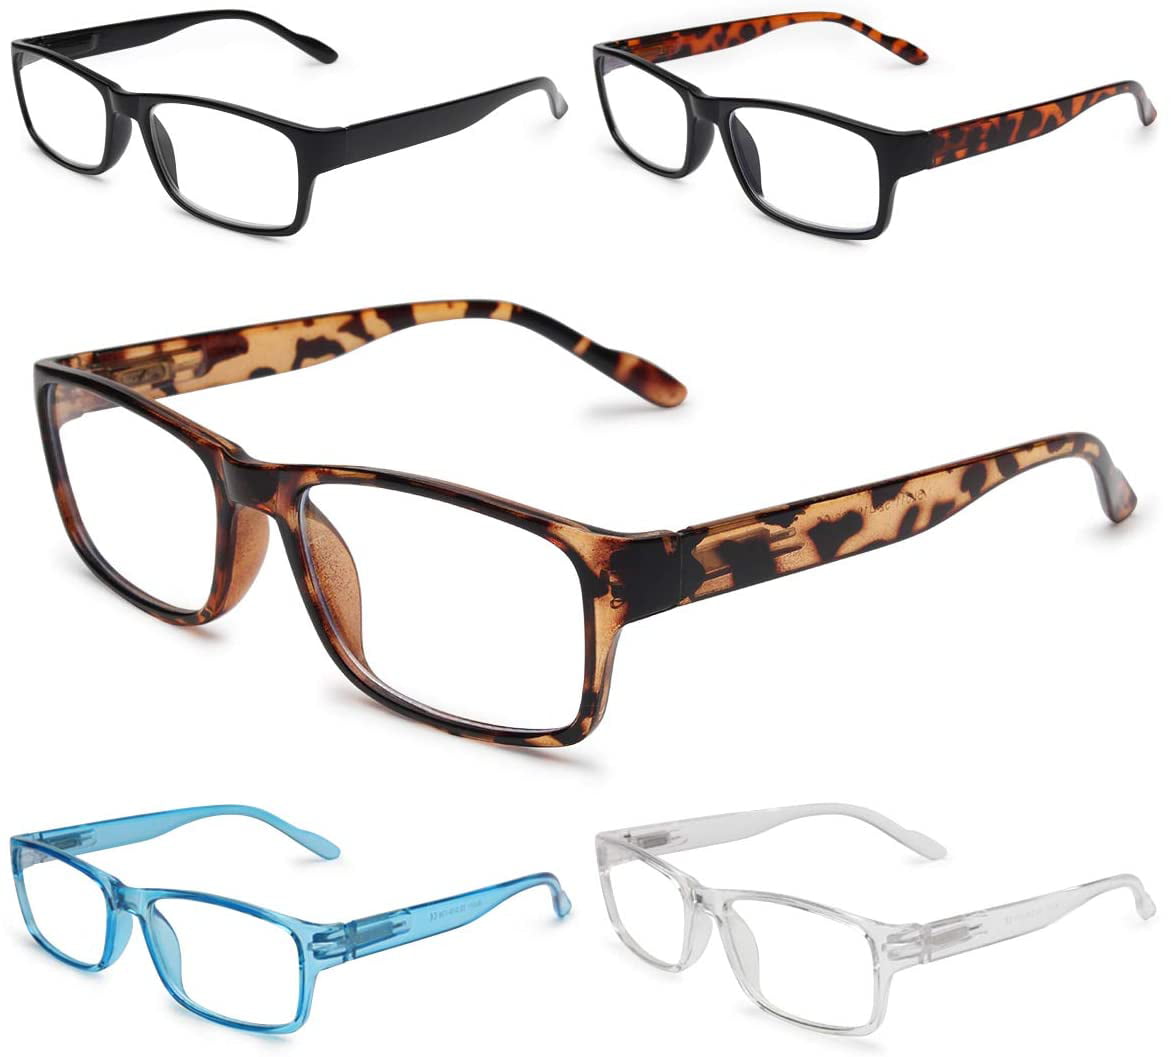 5 Pair Reading Glasses Quality Lightweight Blue Light Blocking Eyeglasses with Spring Hinge Readers for Women Men 